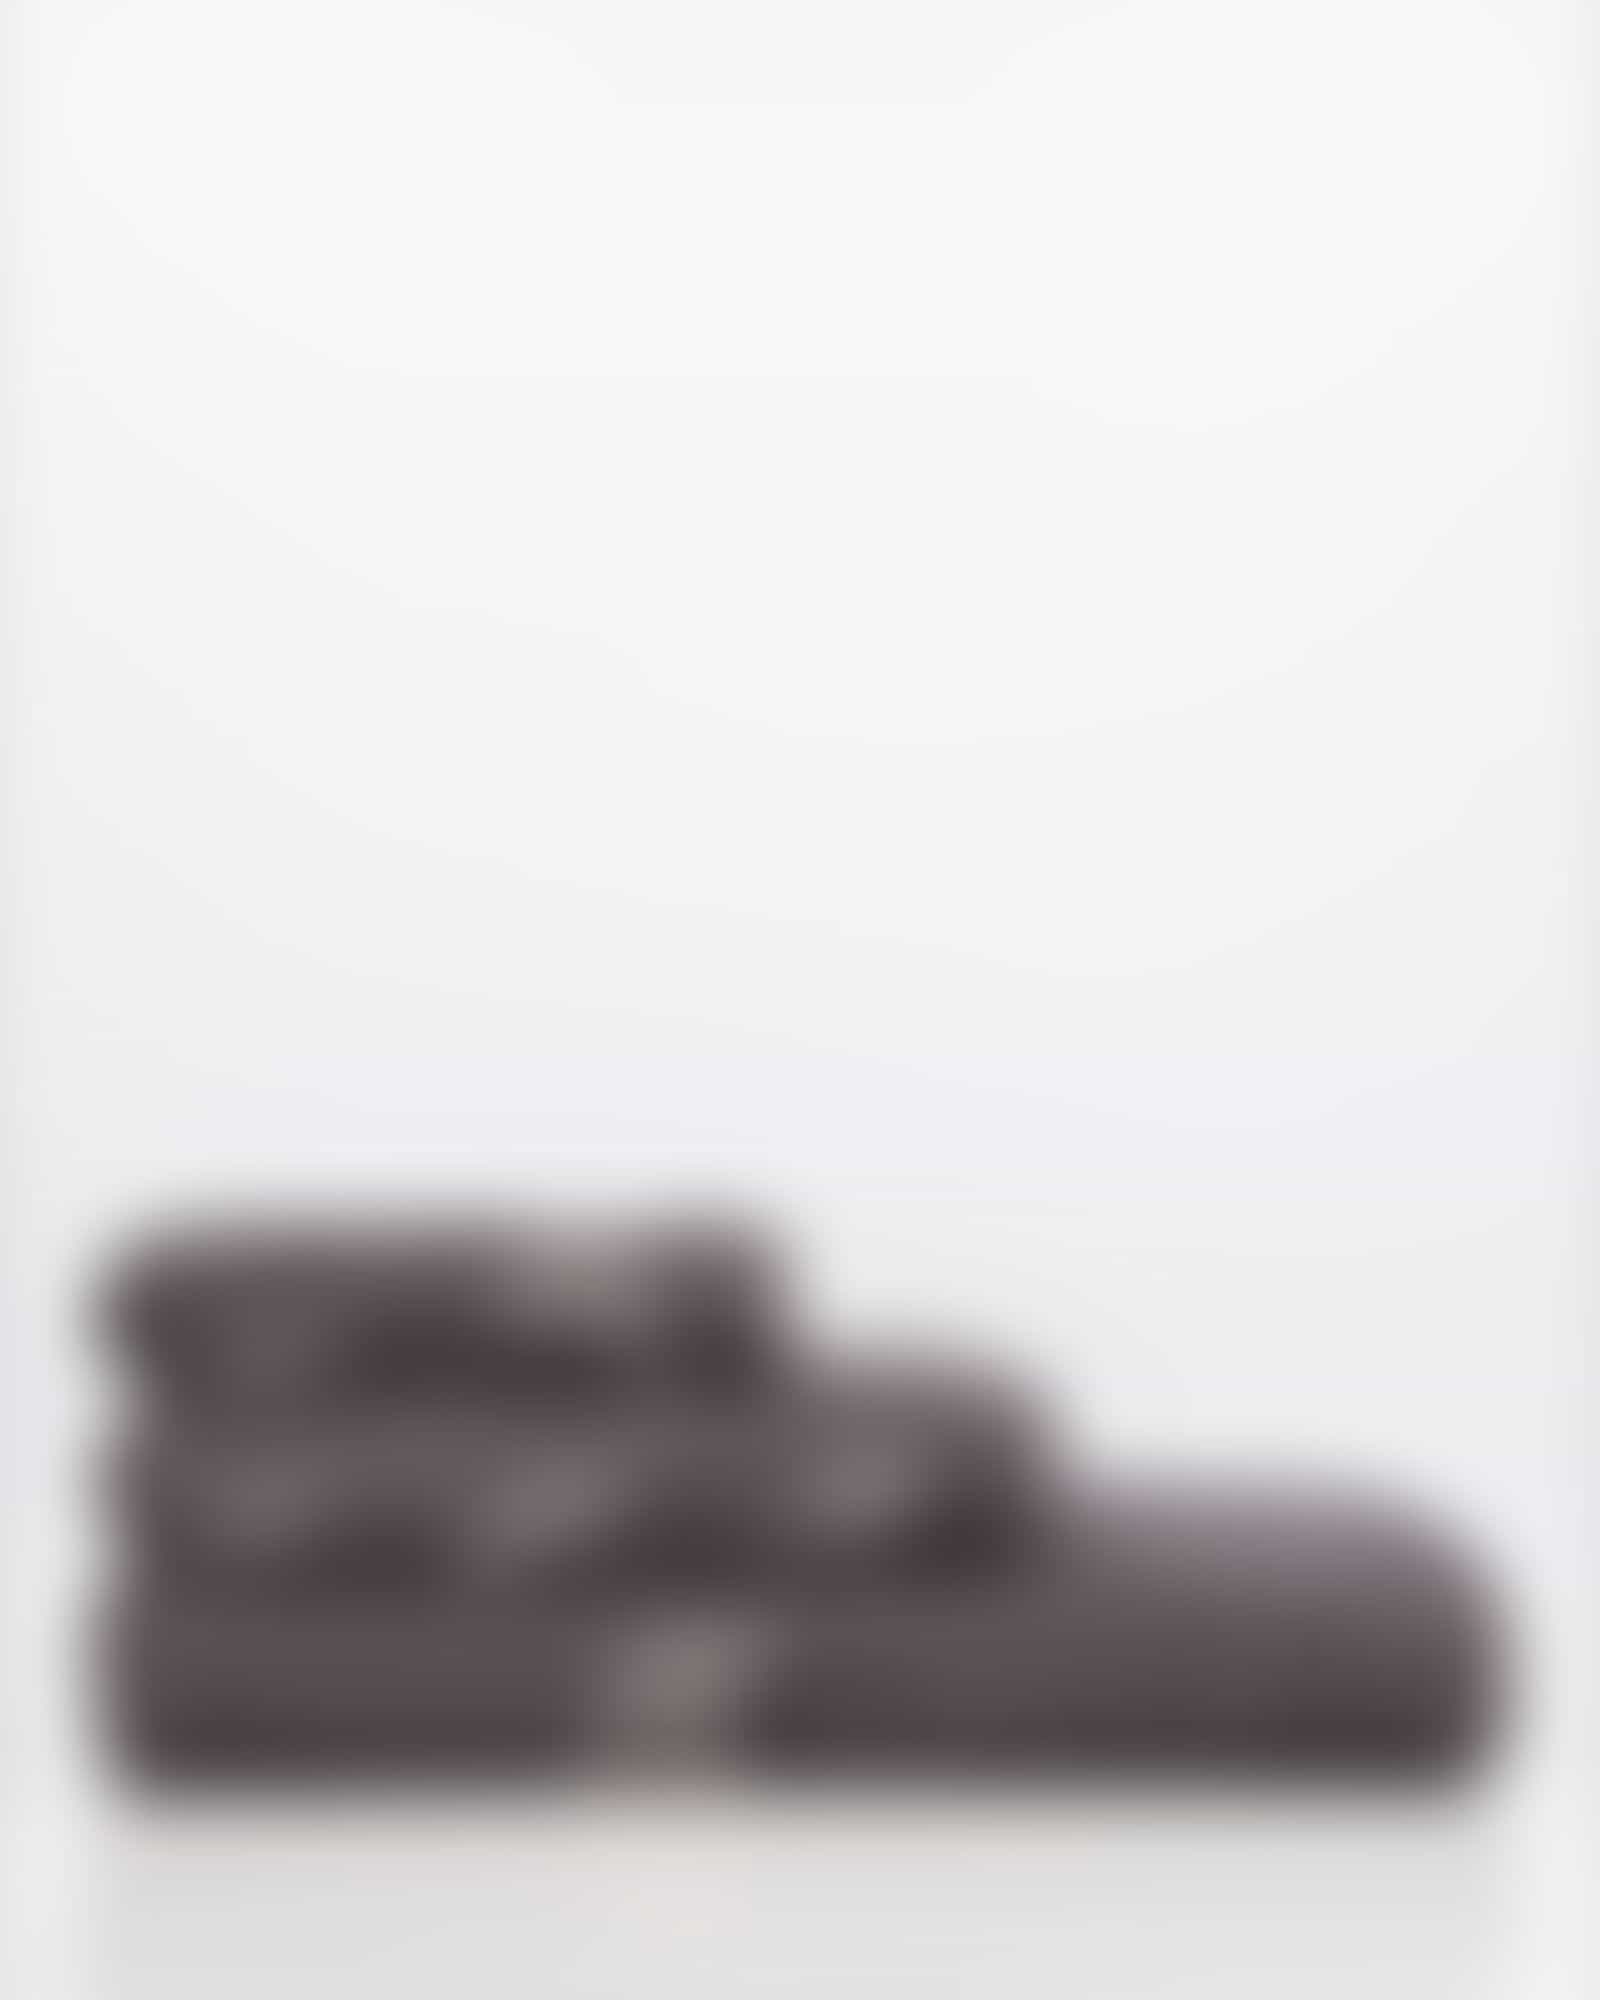 JOOP Move Faded Cornflower 1691 - Farbe: anthrazit - 77 - Handtuch 50x100 cm Detailbild 3